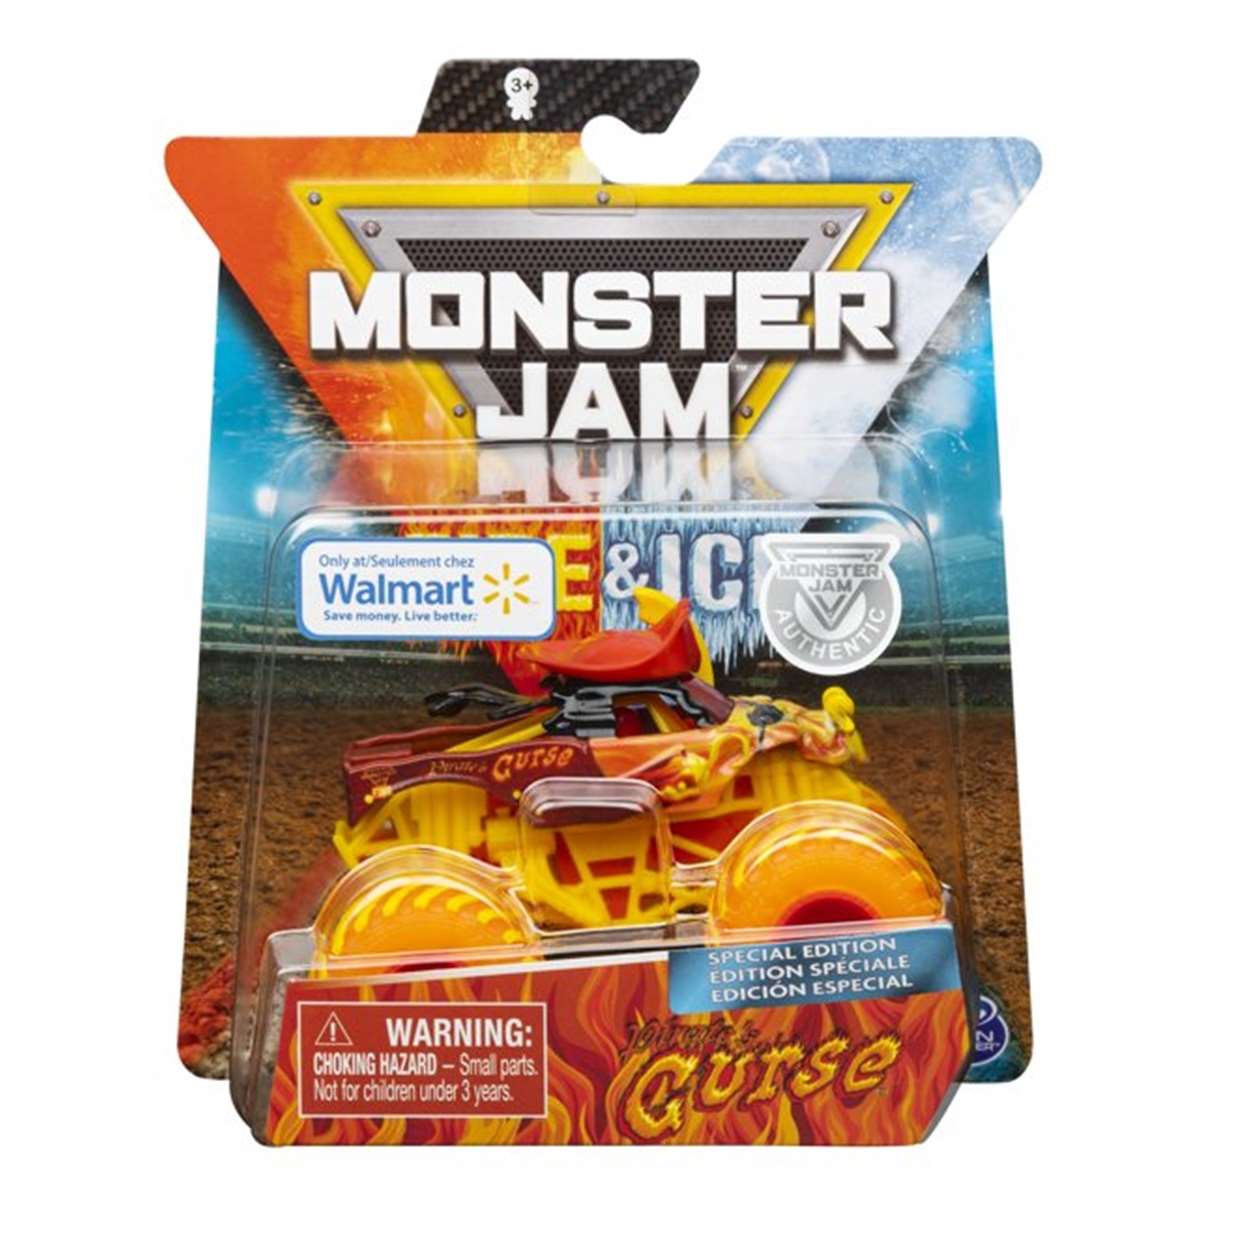 Pirates Curse 1/64 Monster Jam Fire & Ice Exclusivo Walmart